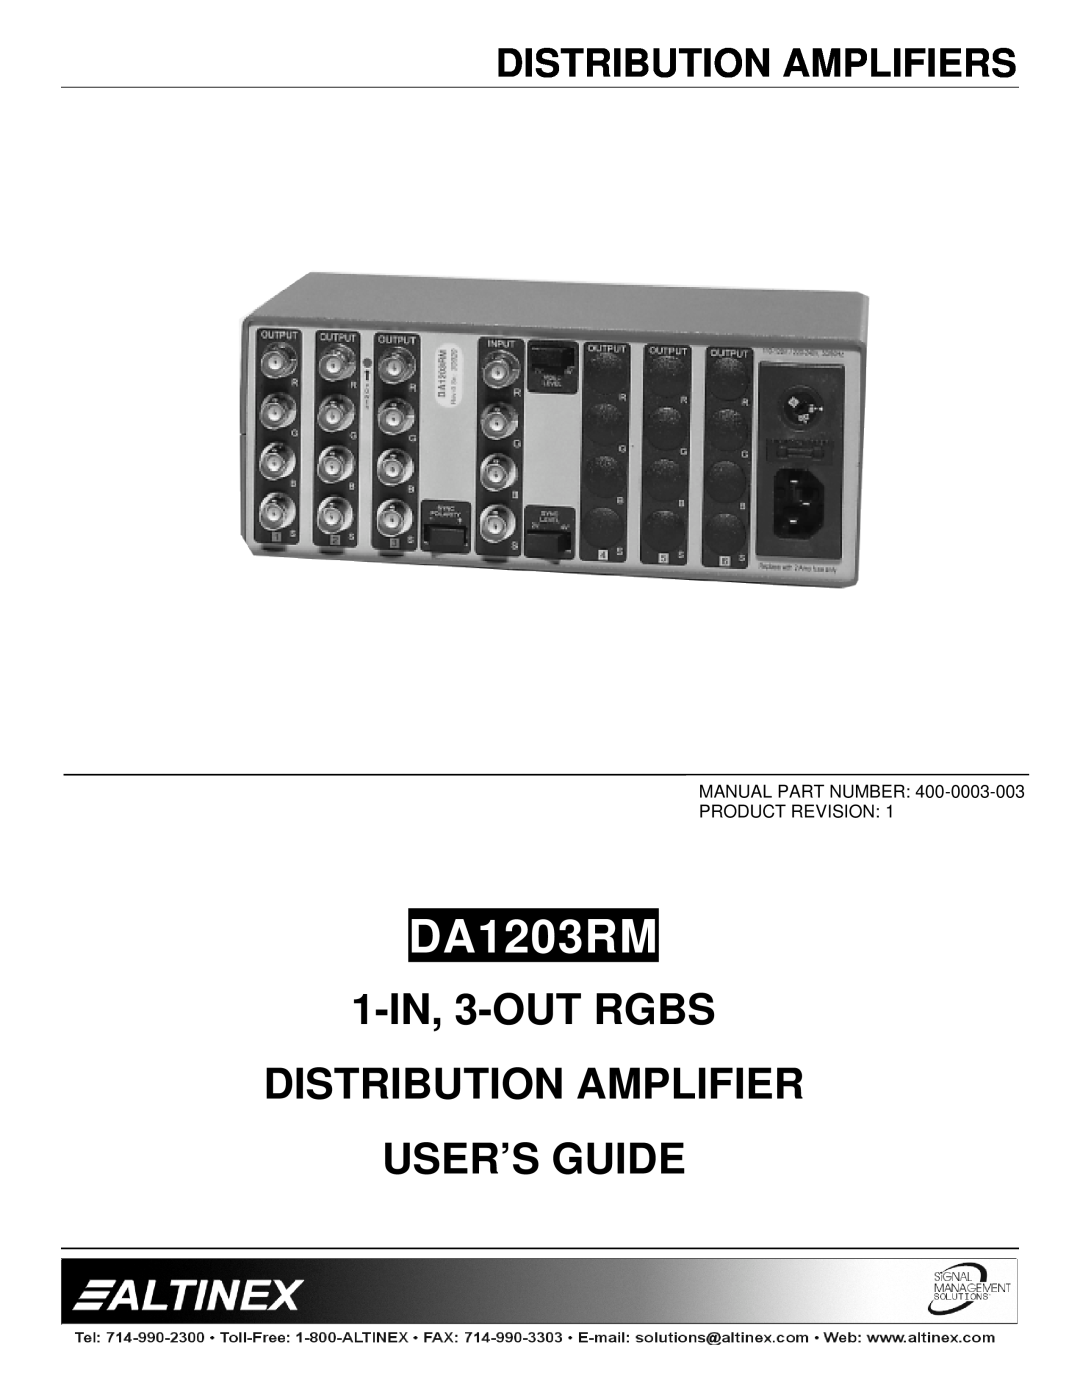 Altinex DA1203RM manual Distribution Amplifiers, 1-IN, 3-OUTRGBS DISTRIBUTION AMPLIFIER, User’S Guide 